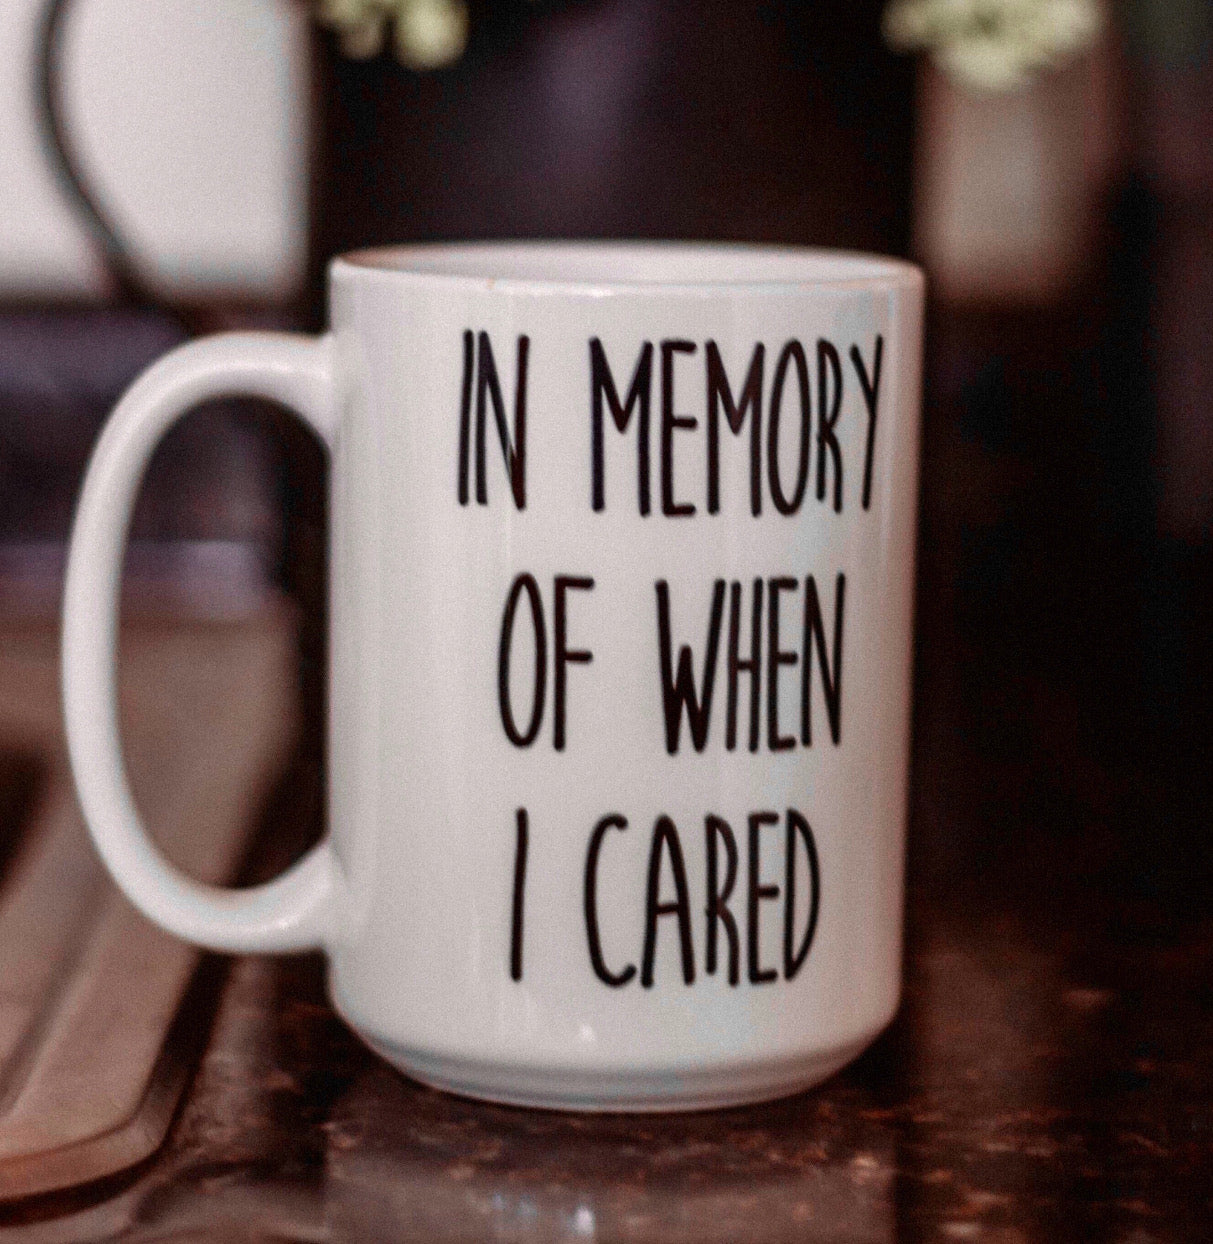 In Memory Of When I Cared Mug